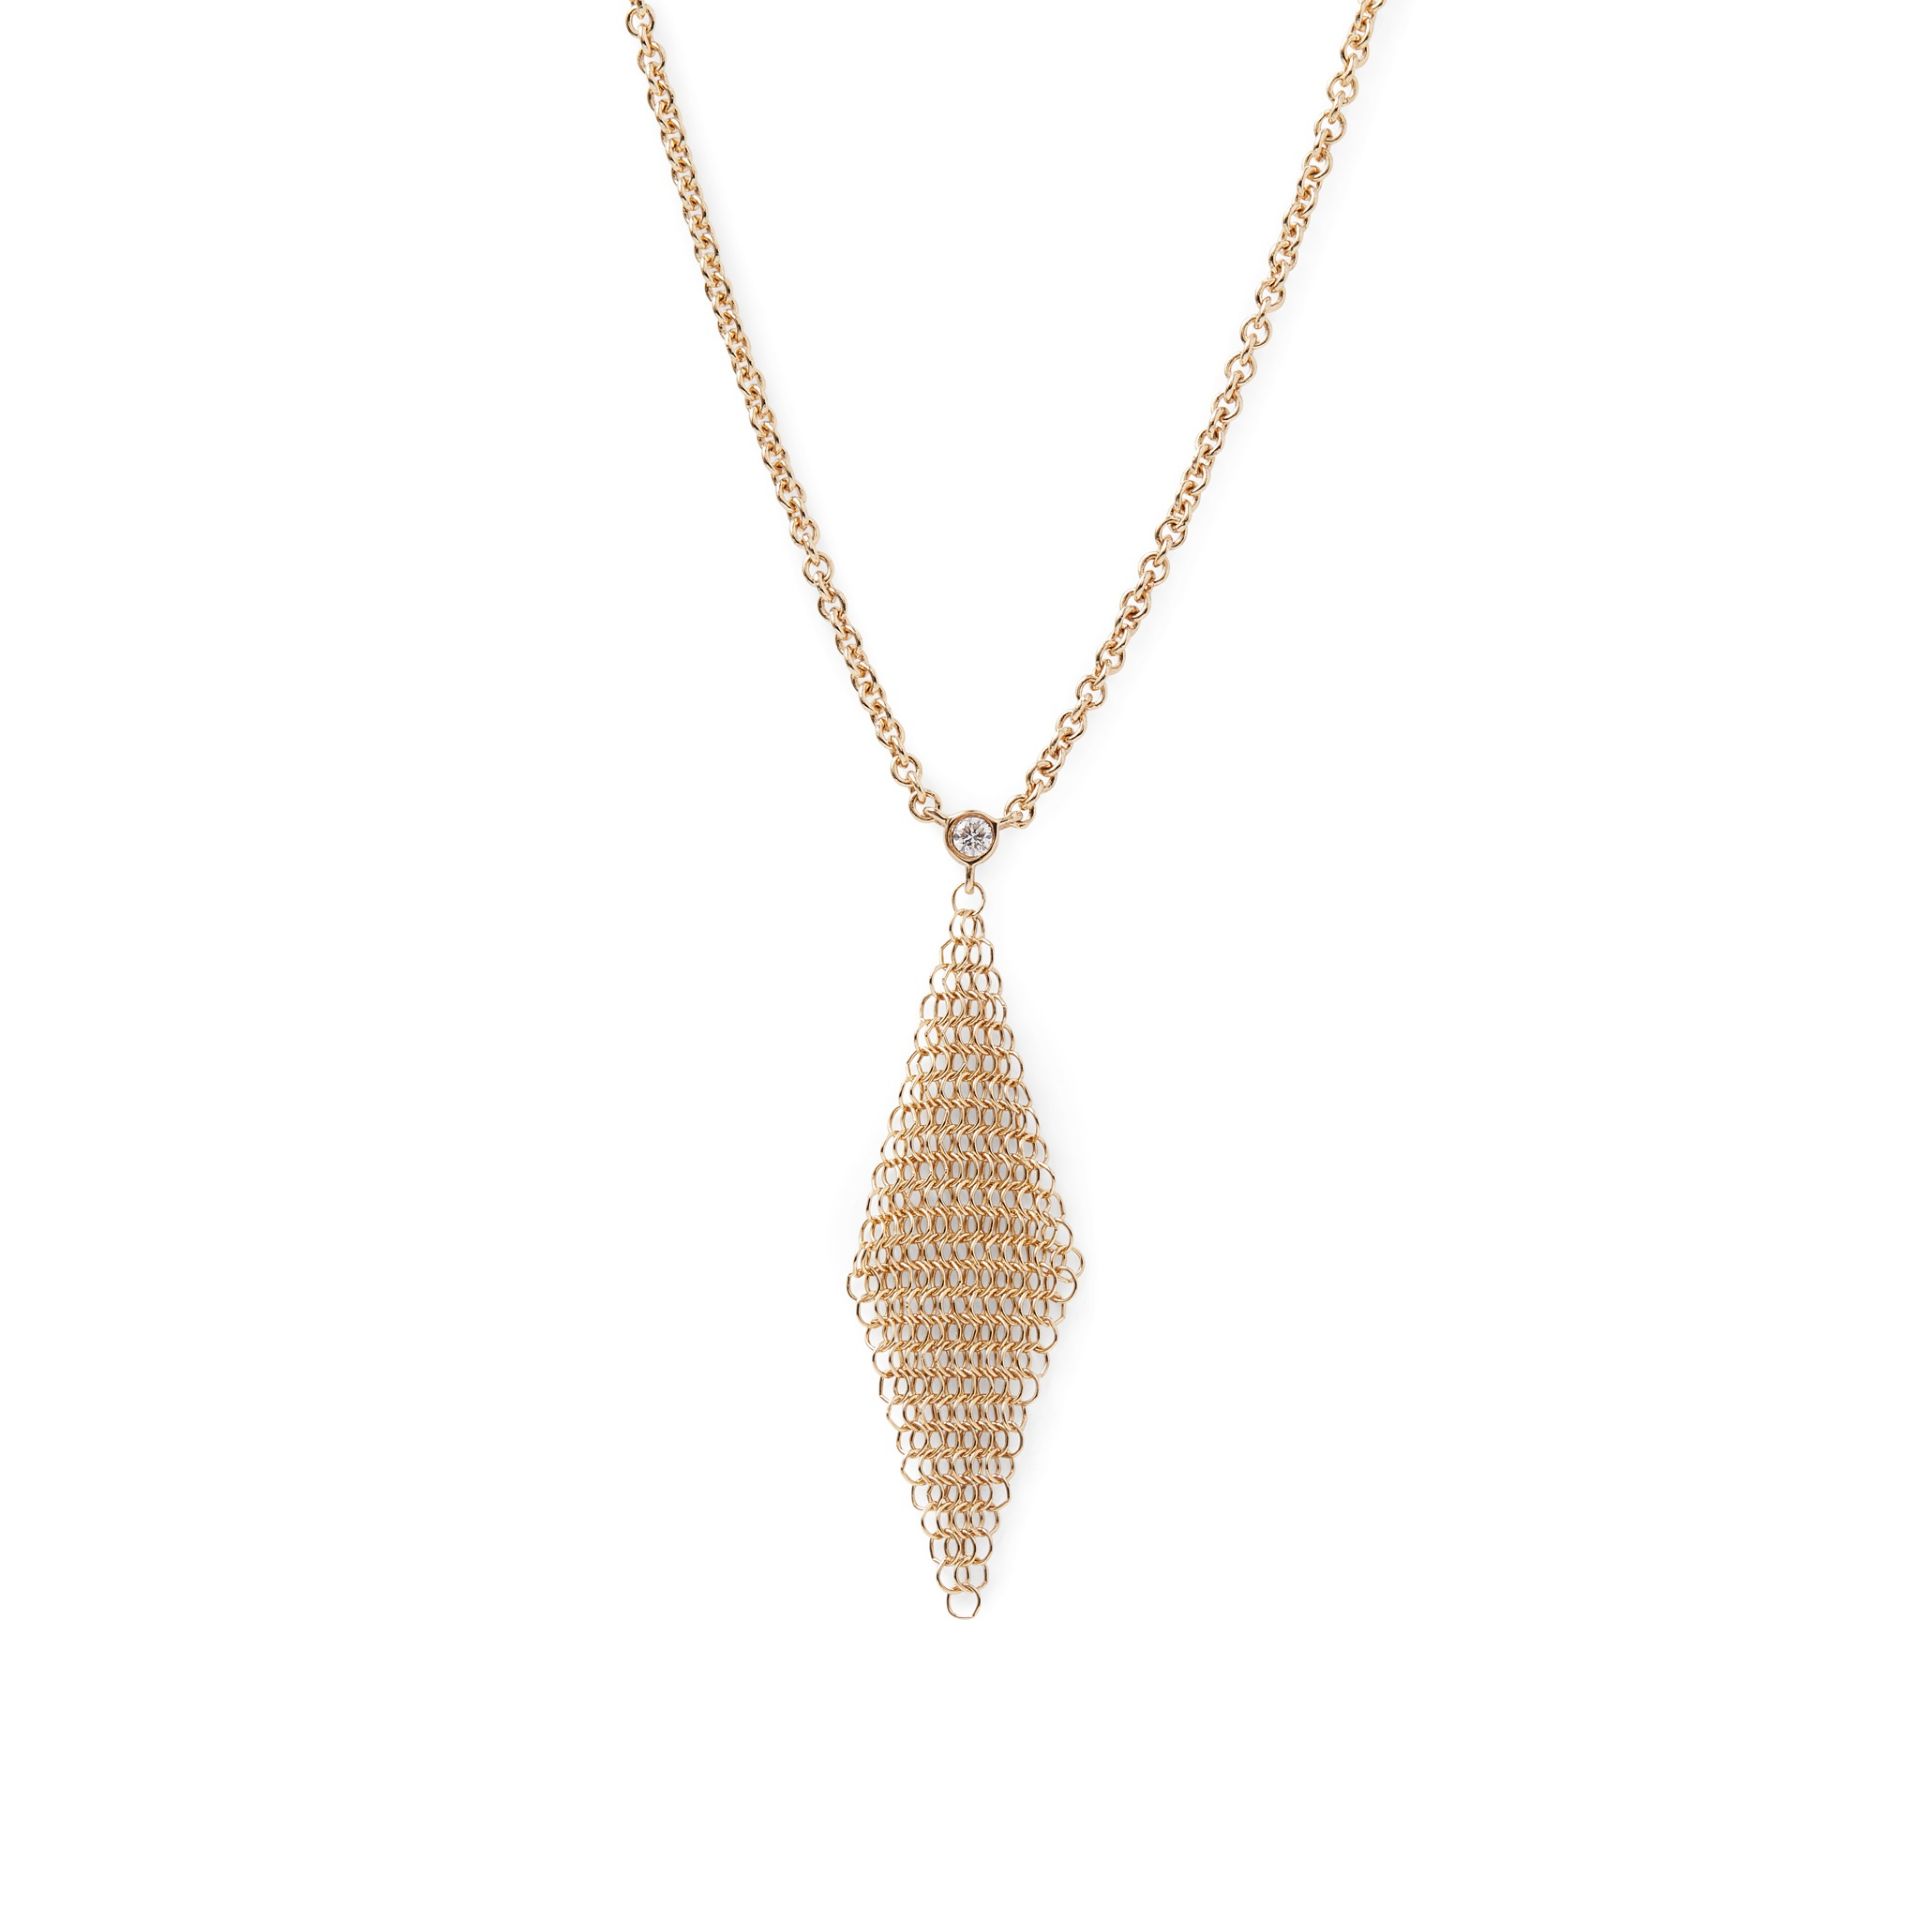 A diamond set mesh pendant, Elsa Peretti for Tiffany & Co